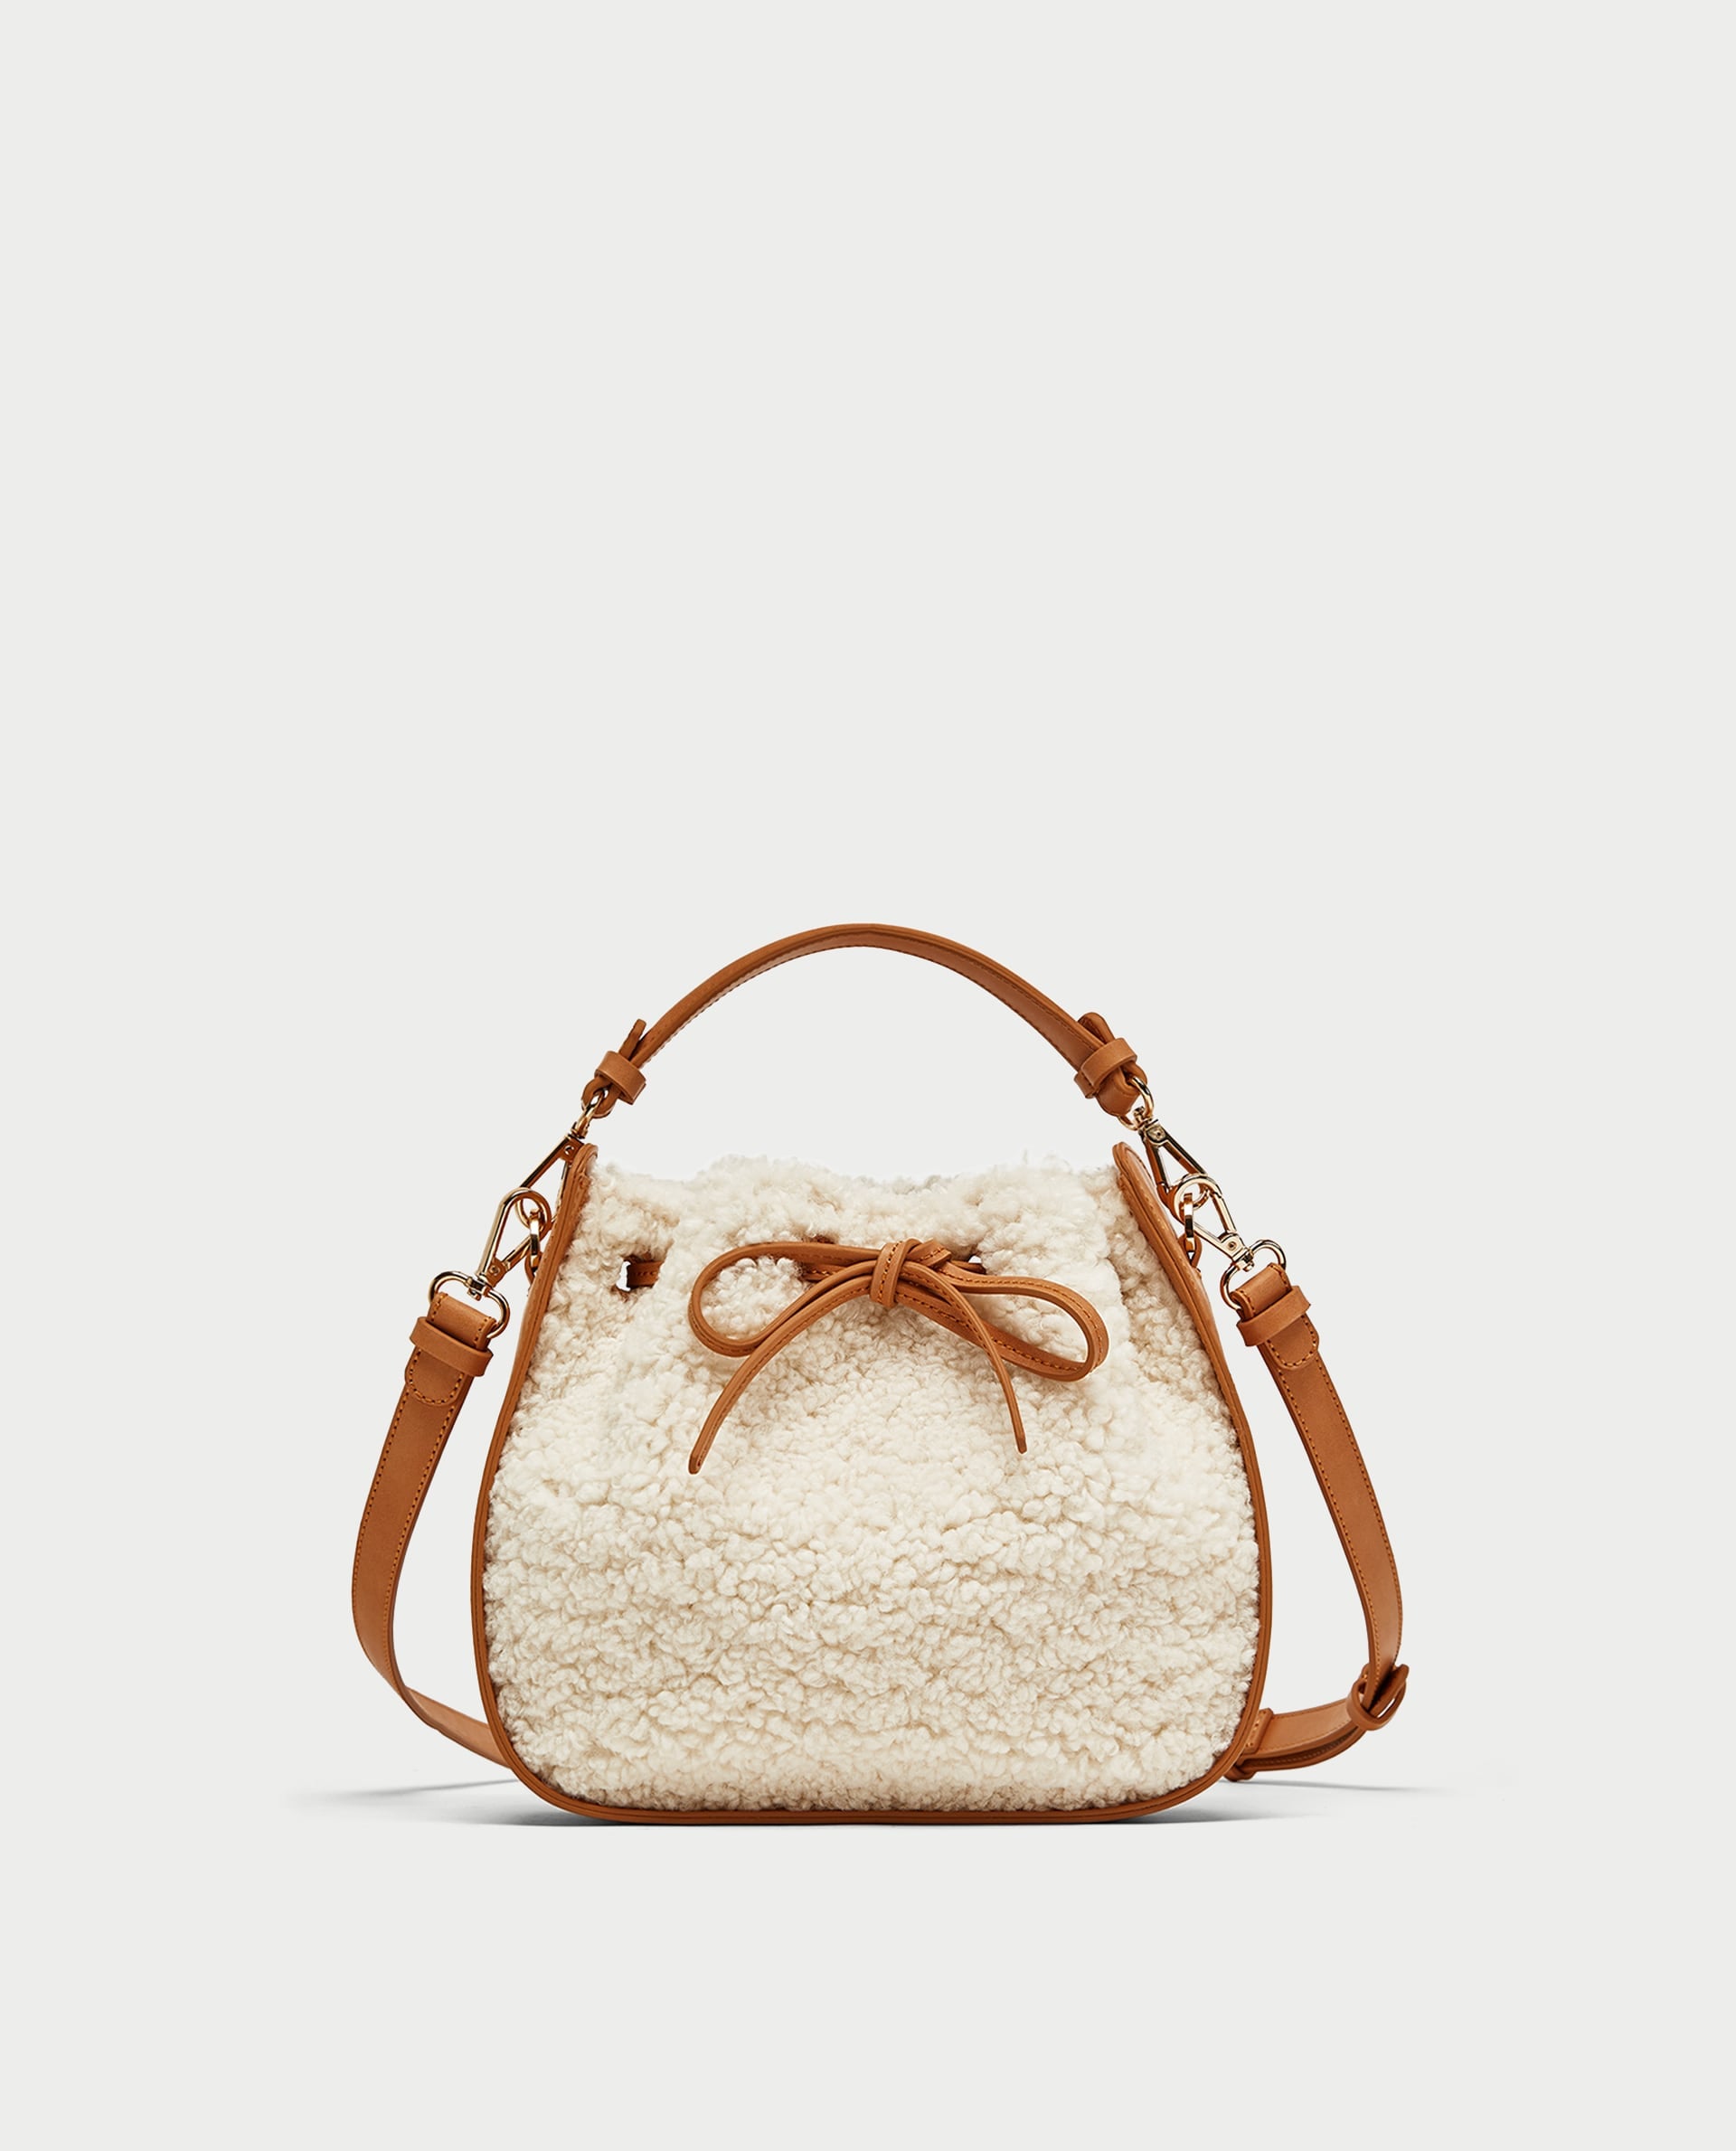 Gigi and Bella Hadid can't stop using these cute mini handbags, London  Evening Standard